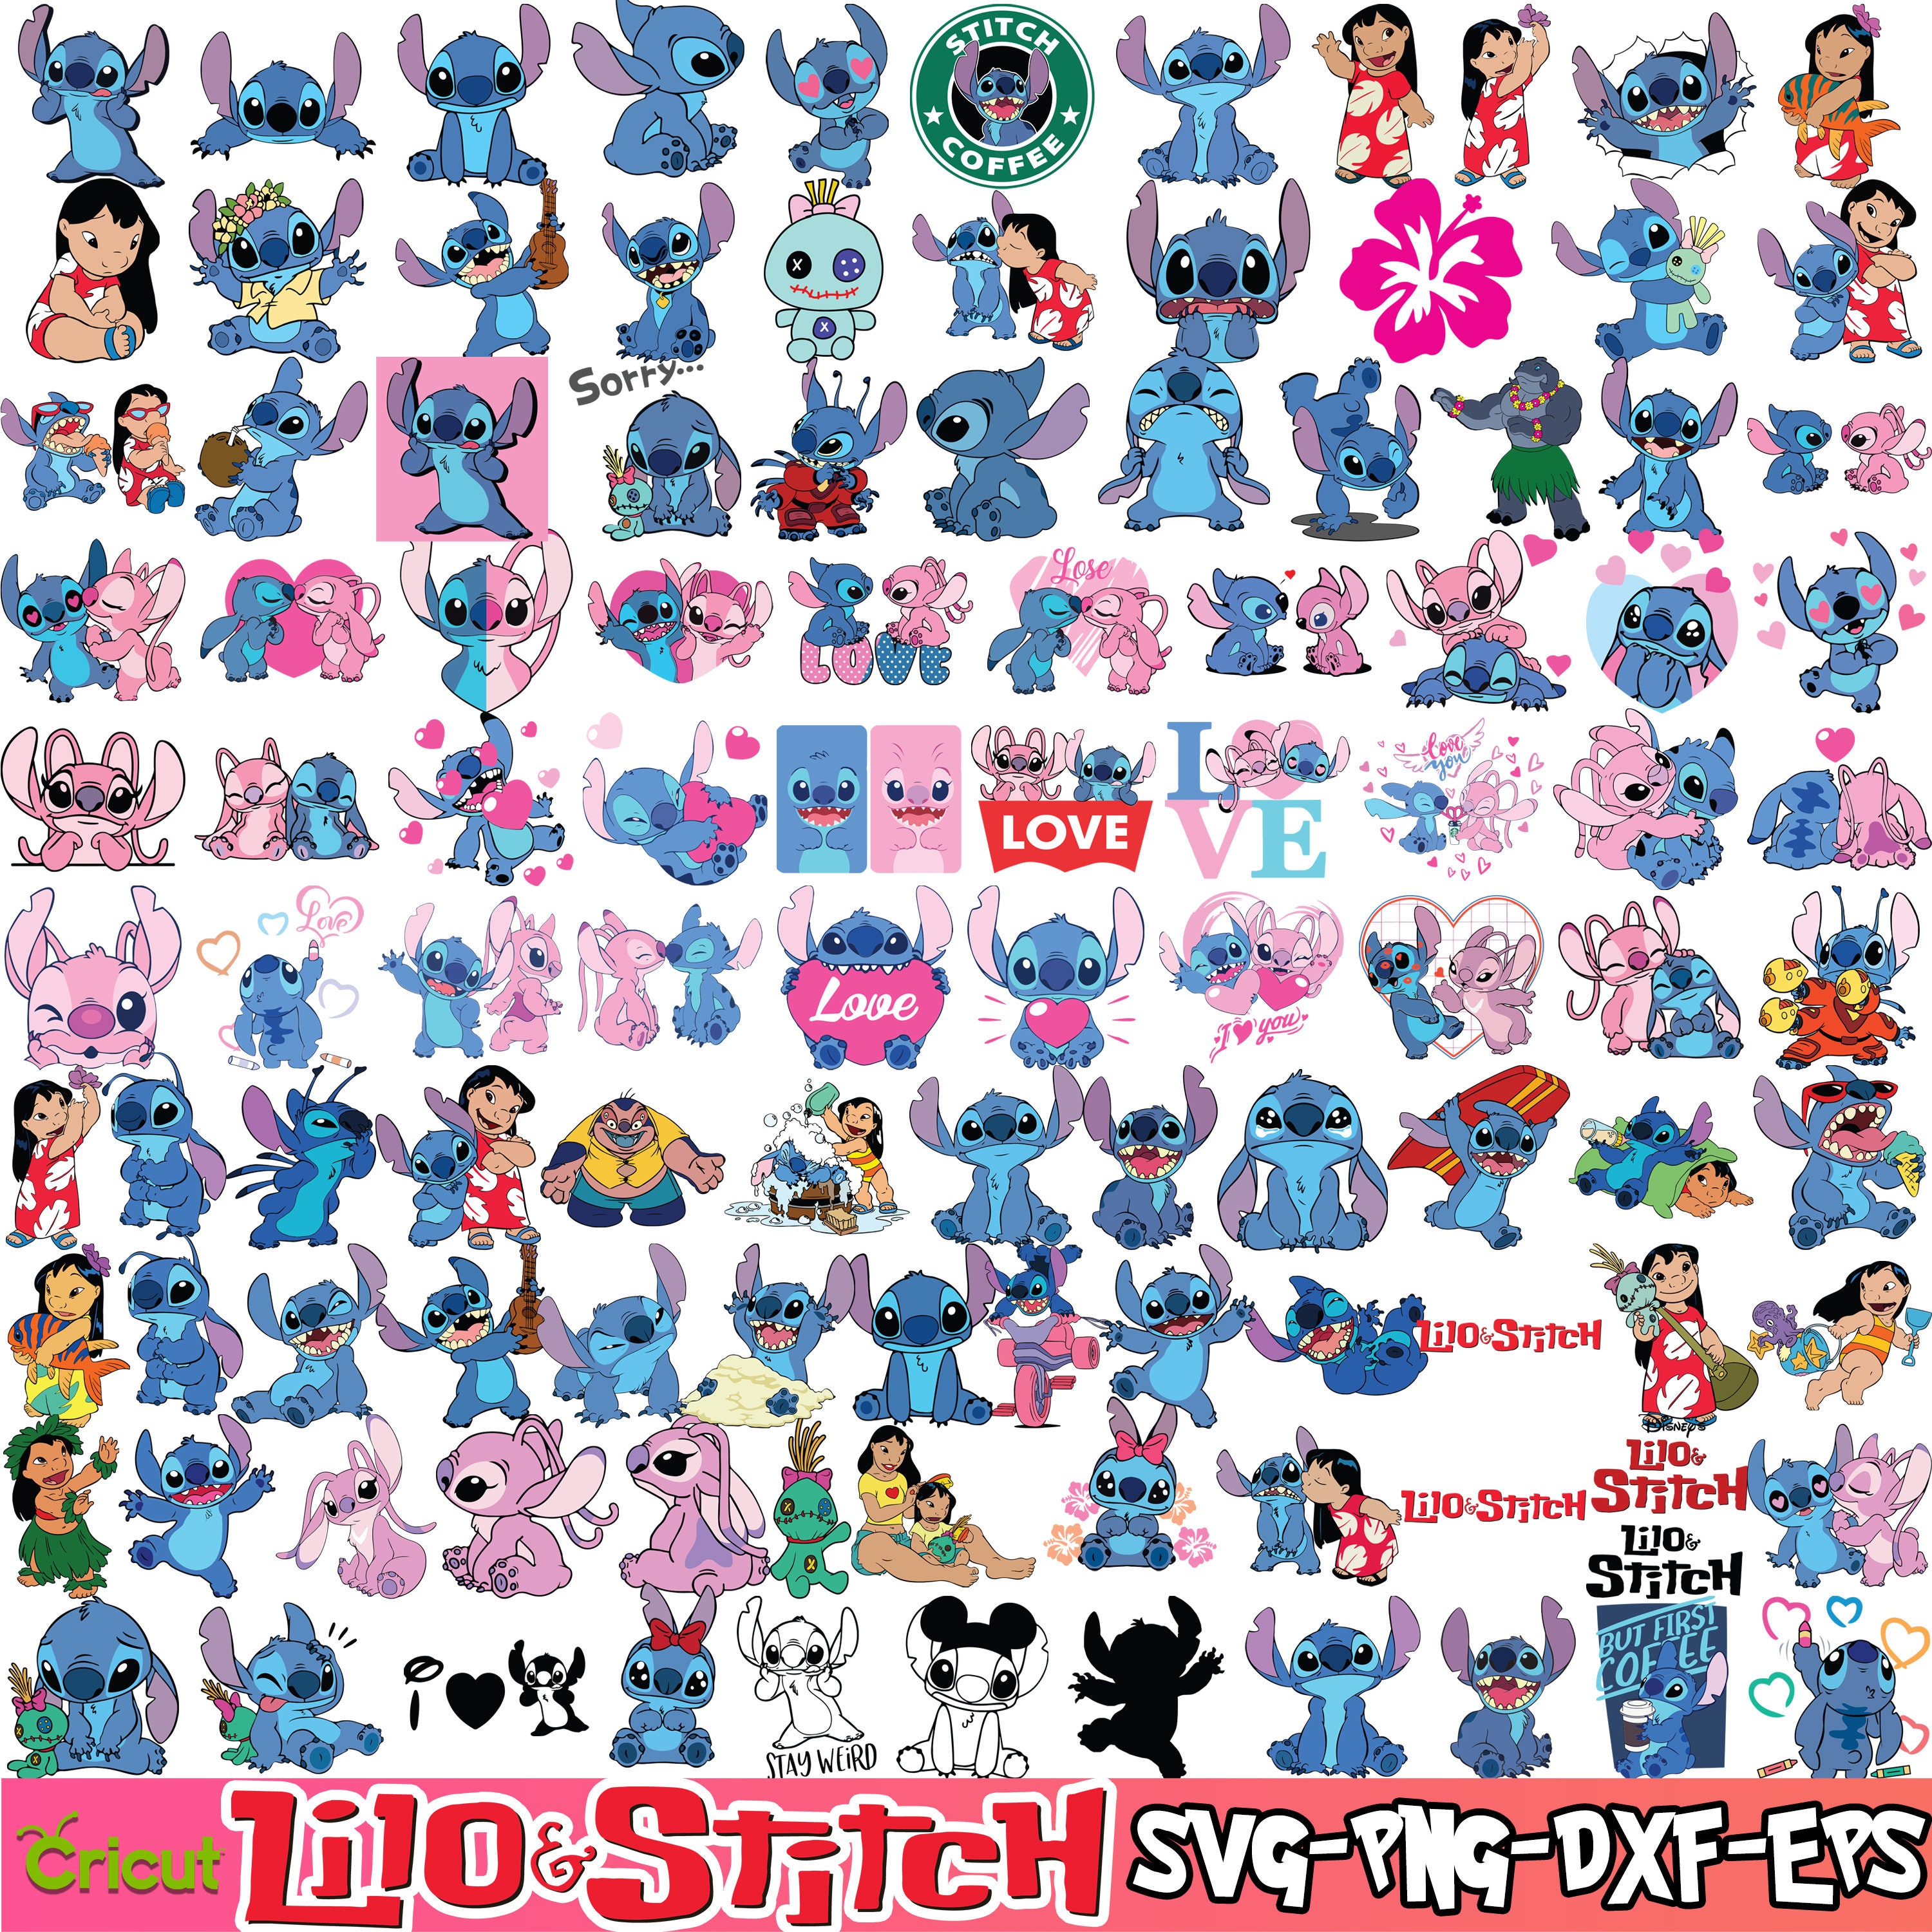 Set of 5 Lilo & Stitch Movie Wall Art Prints / Lilo and Stitch